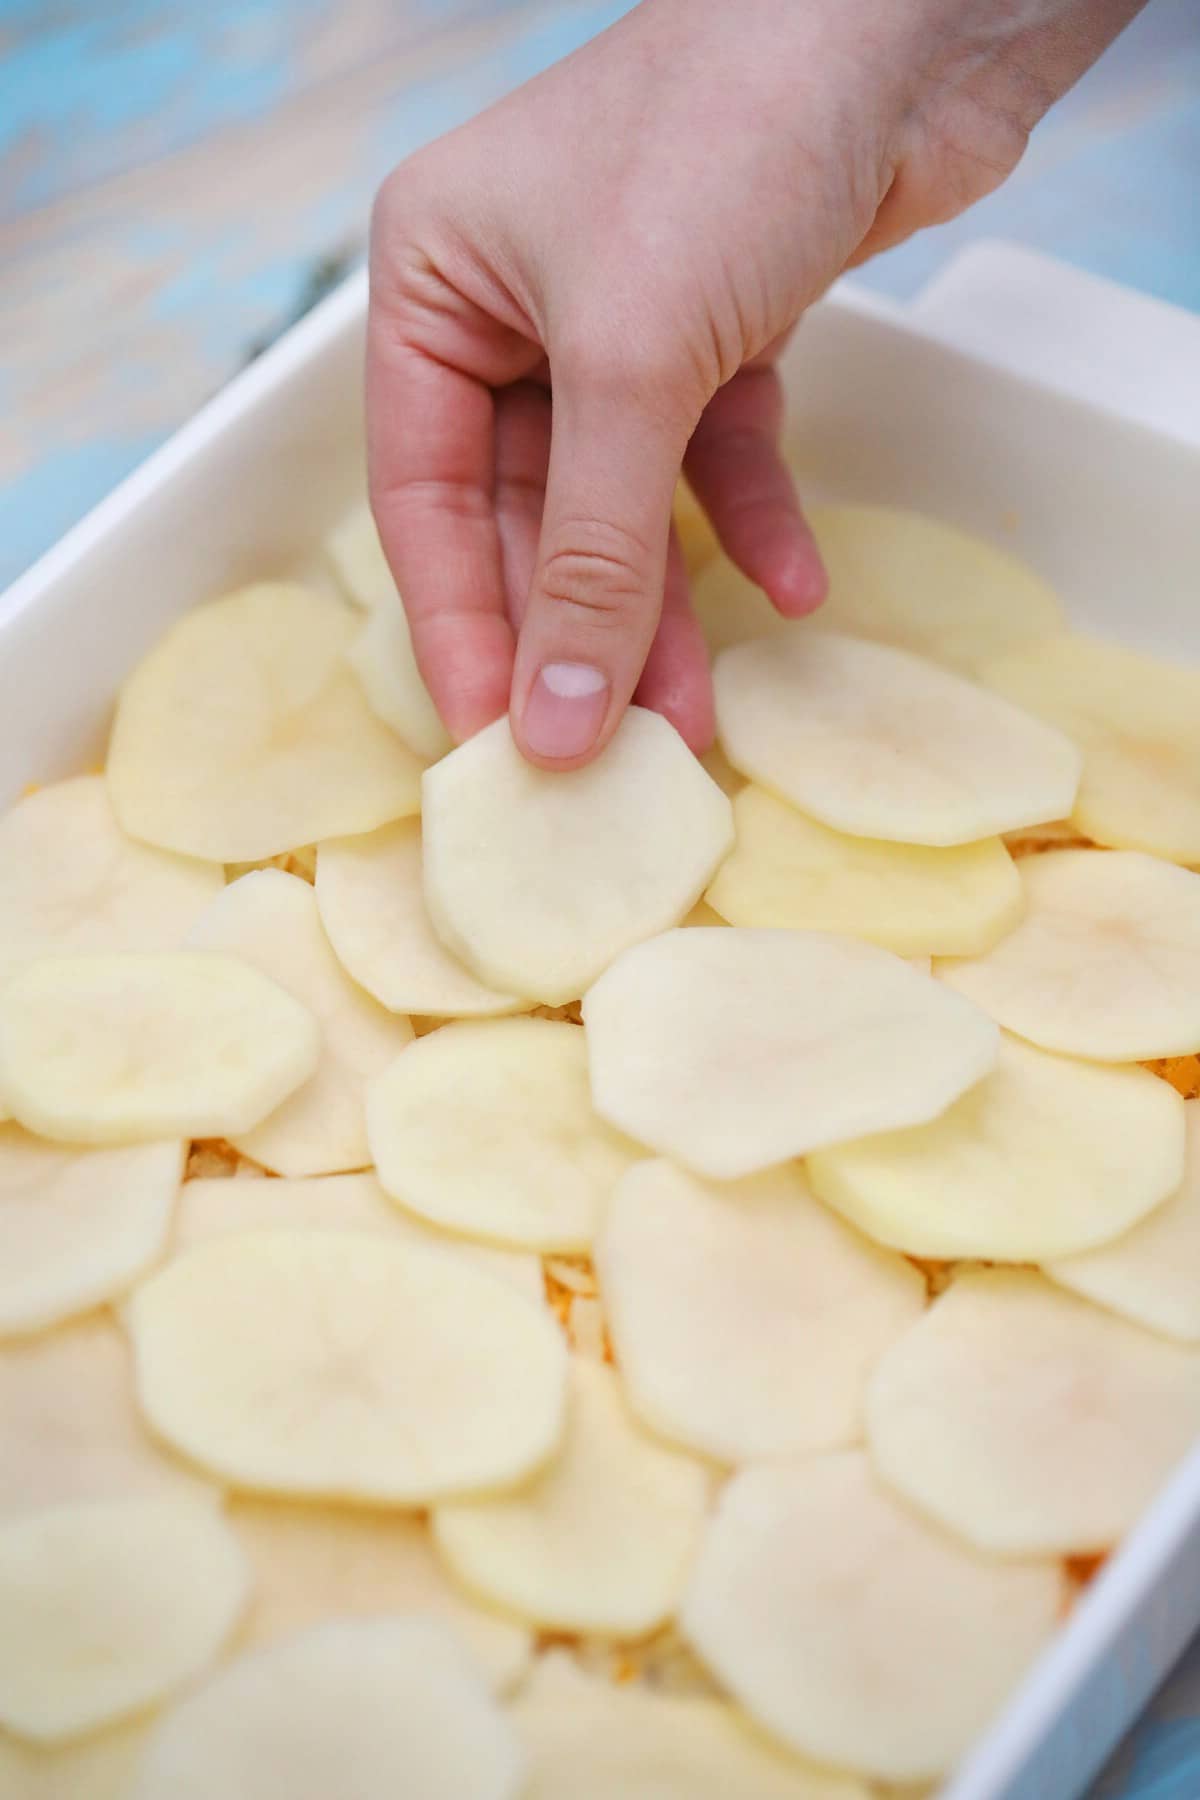 Adding potatoes to casserole